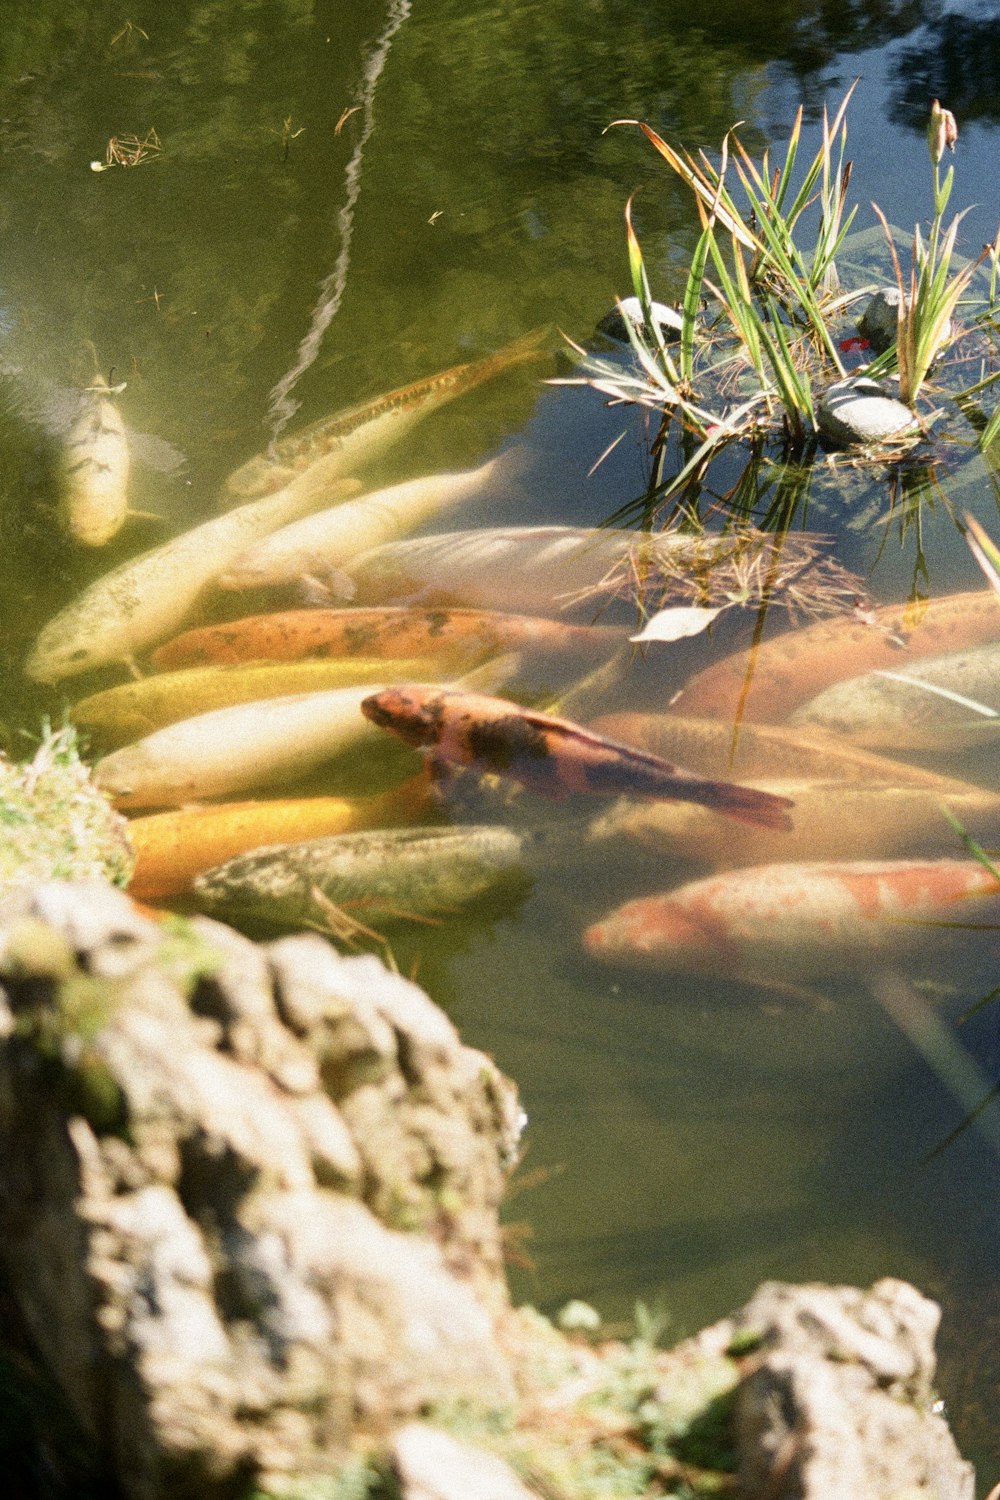 orange and white koi fish in pond